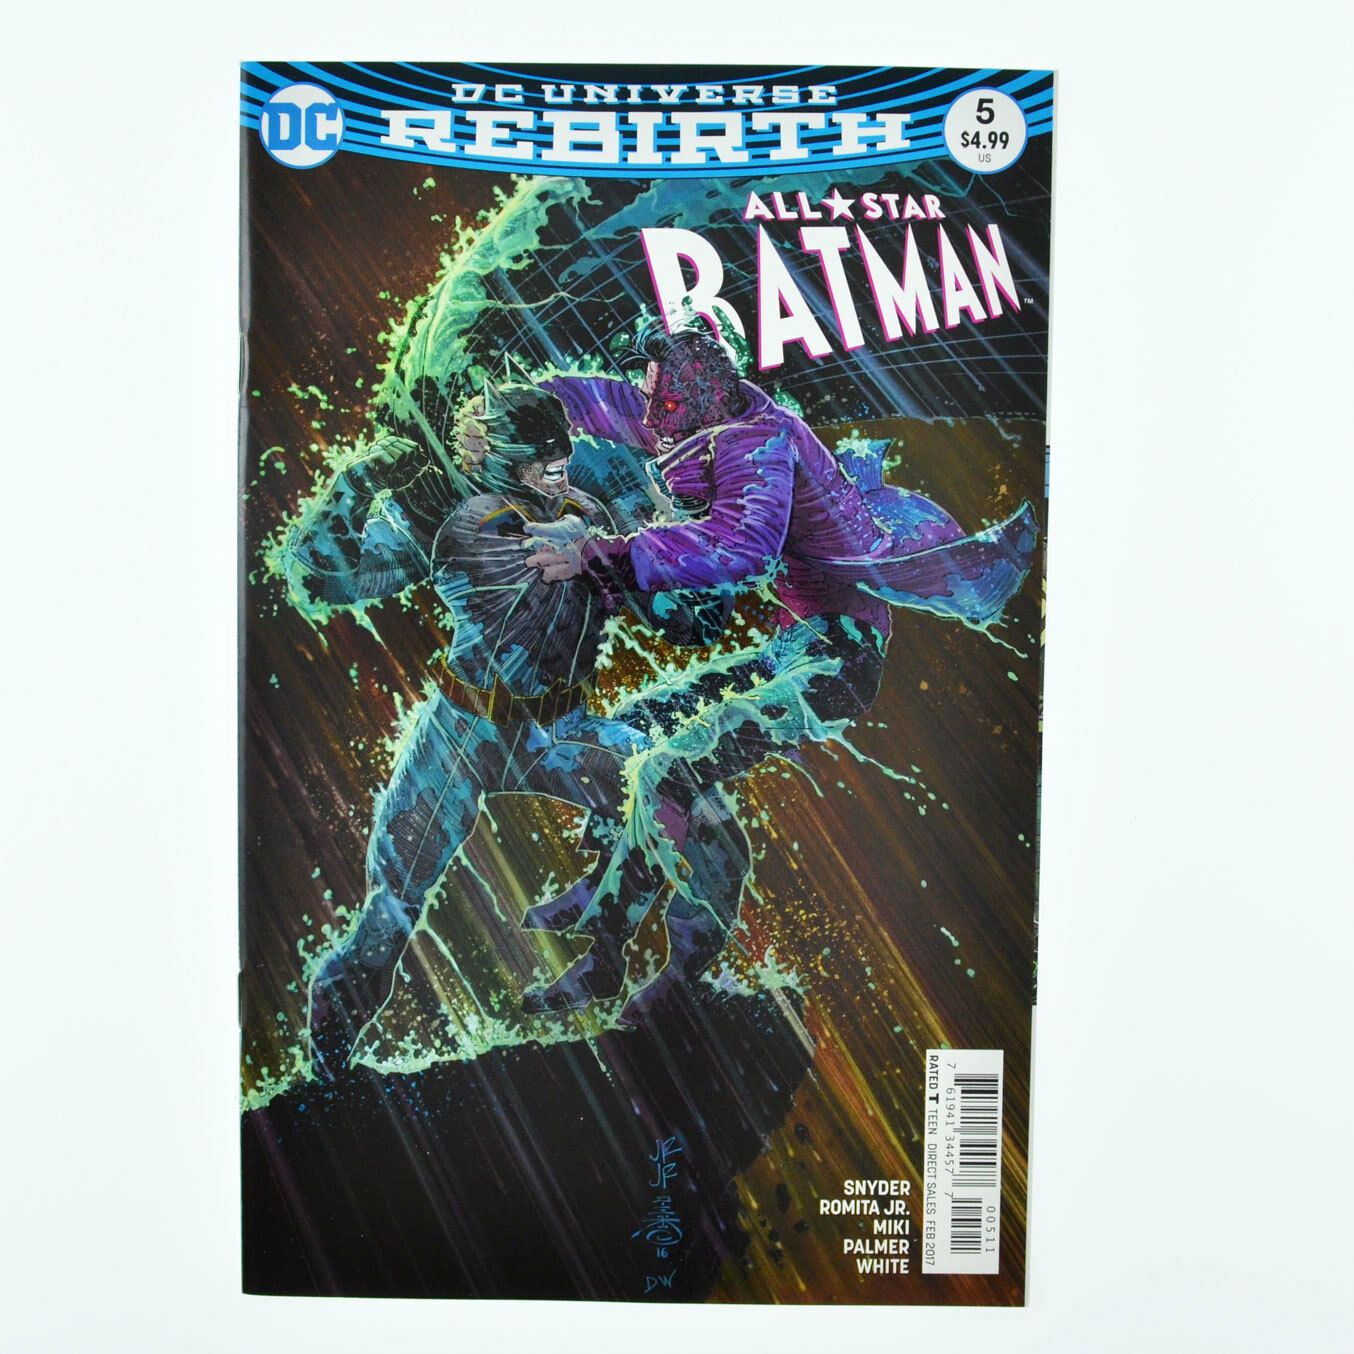 BATMAN ALL STAR #5 - DC Universe Rebirth Comics 2017 - VF+